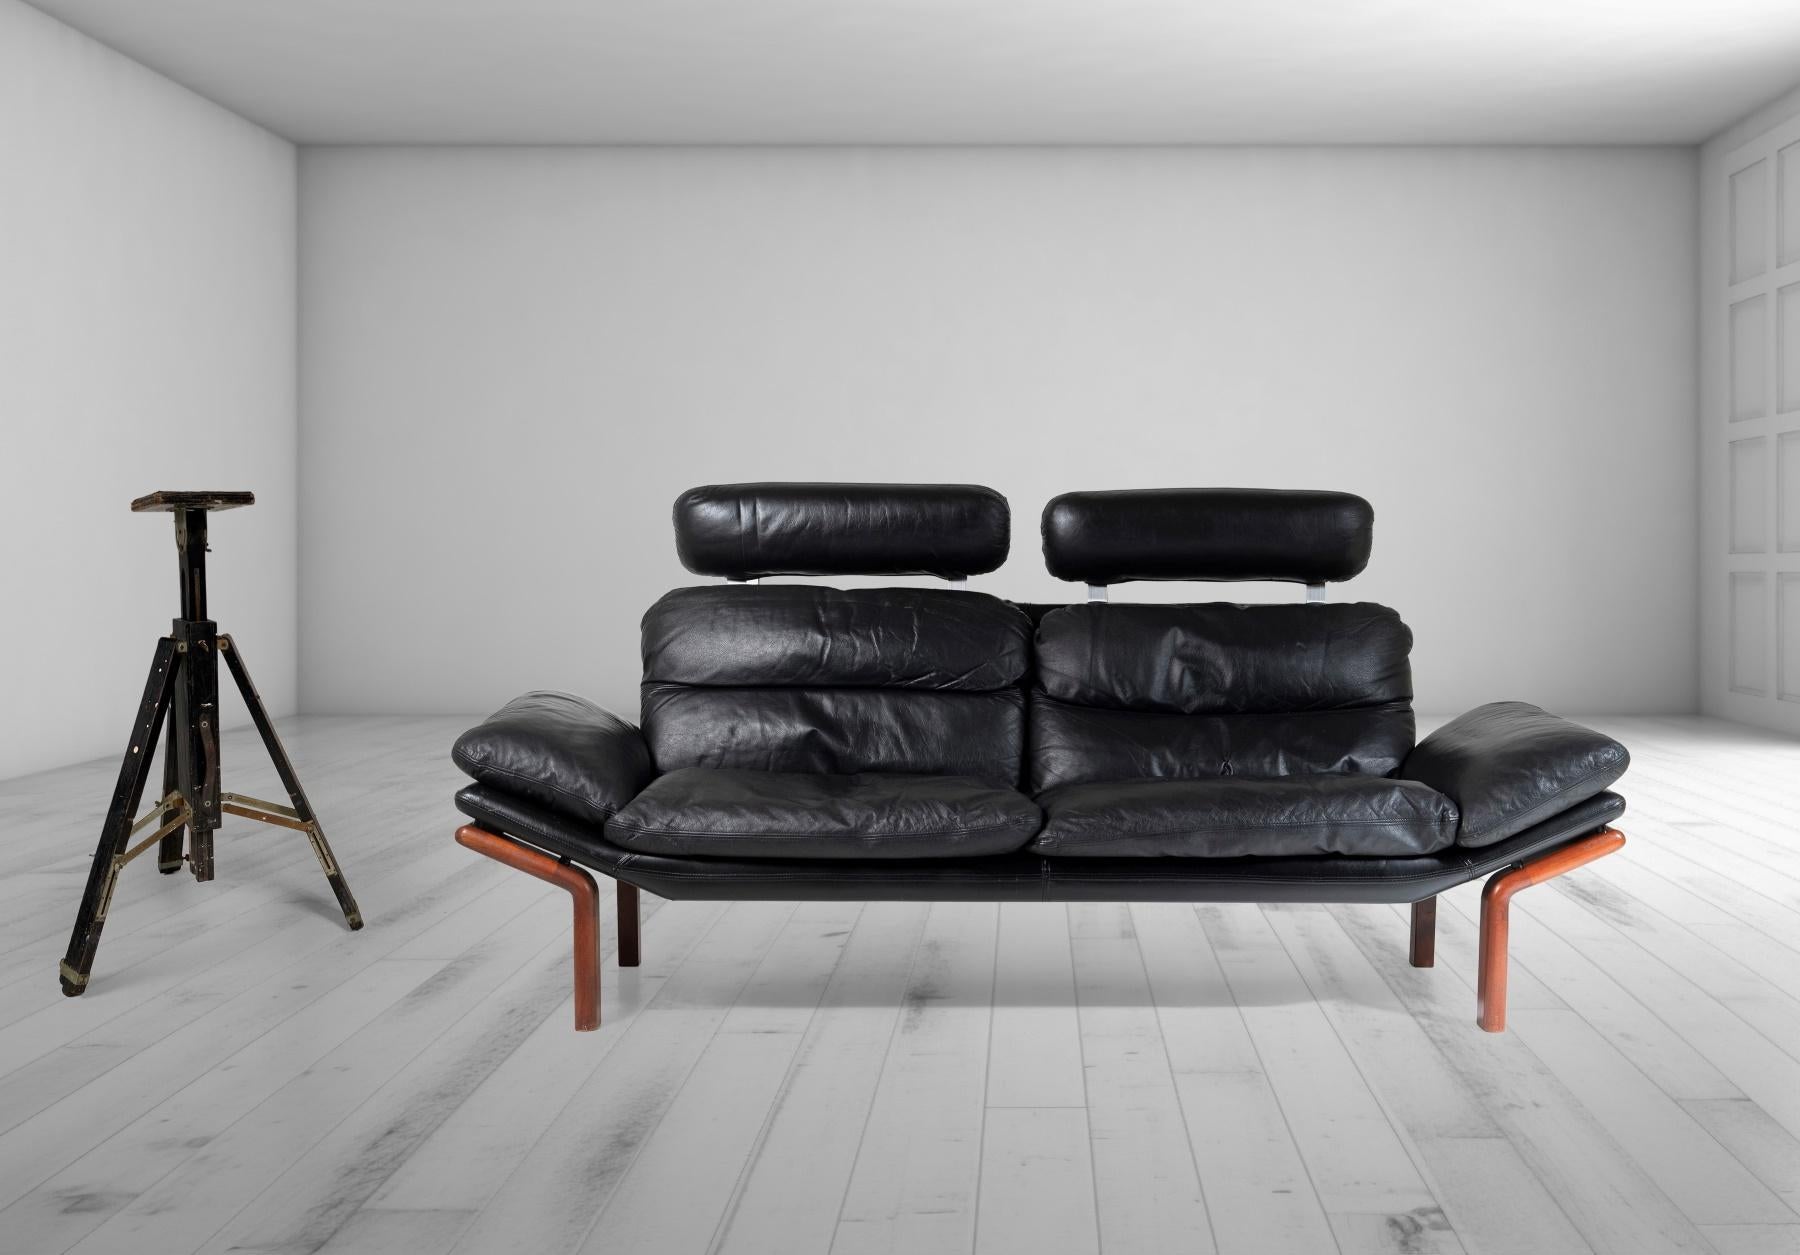 1960-70s Mid-Century Modern Danish Black Leather and Teak Sofa by Komfort For Sale 12